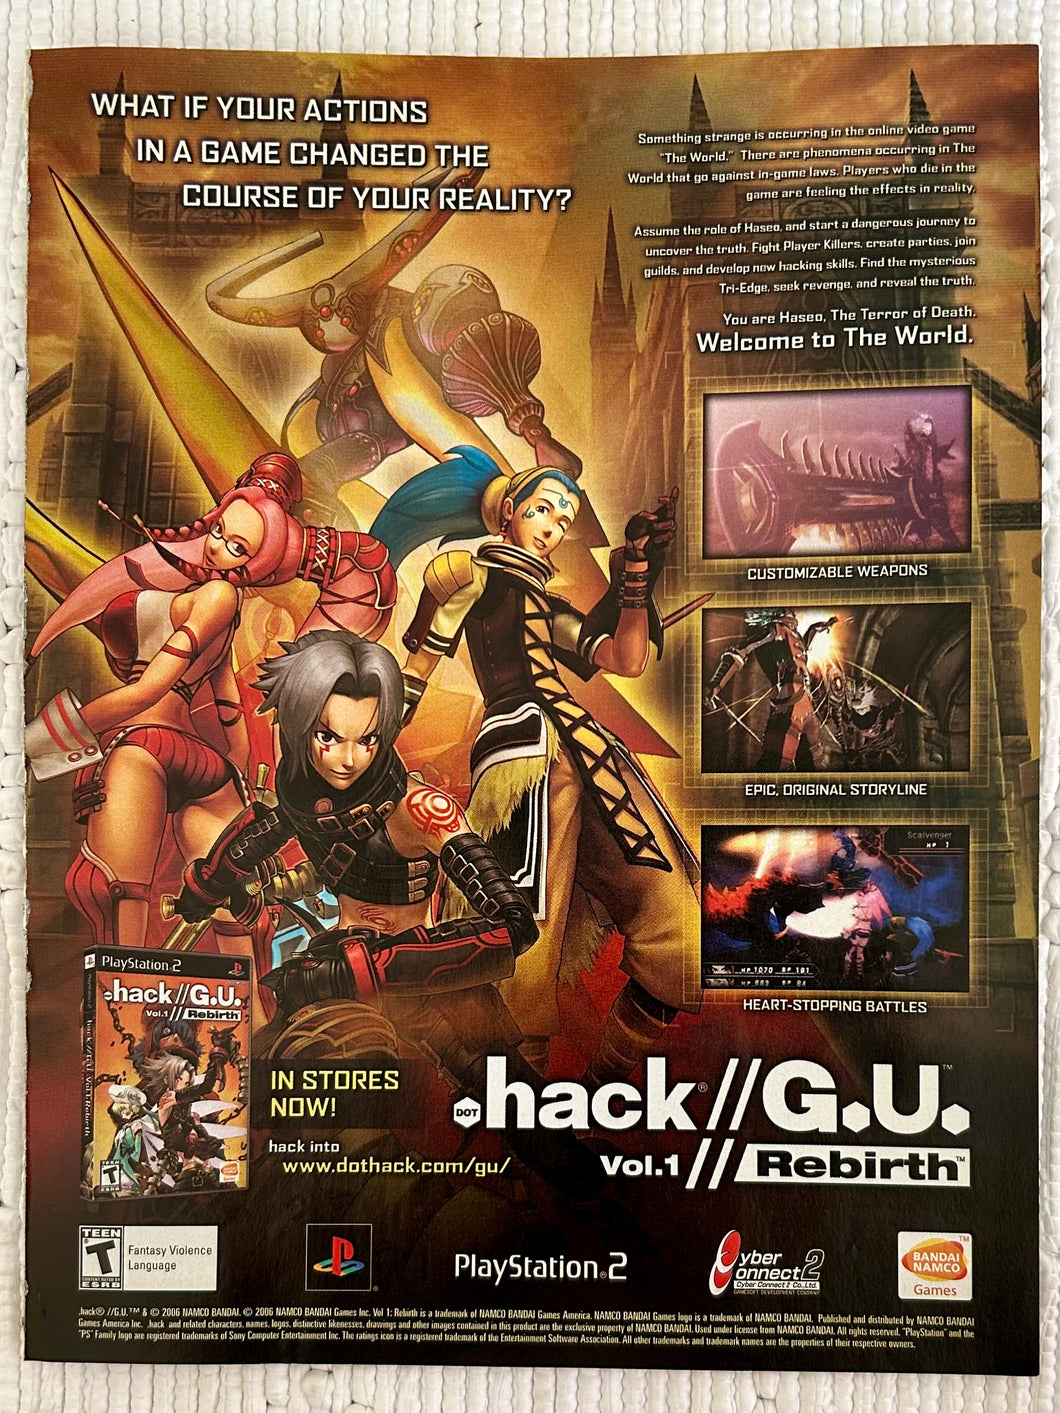 .hack//G.U. Vol.1 Rebirth - PS2 - Original Vintage Advertisement - Print Ads - Laminated A4 Poster